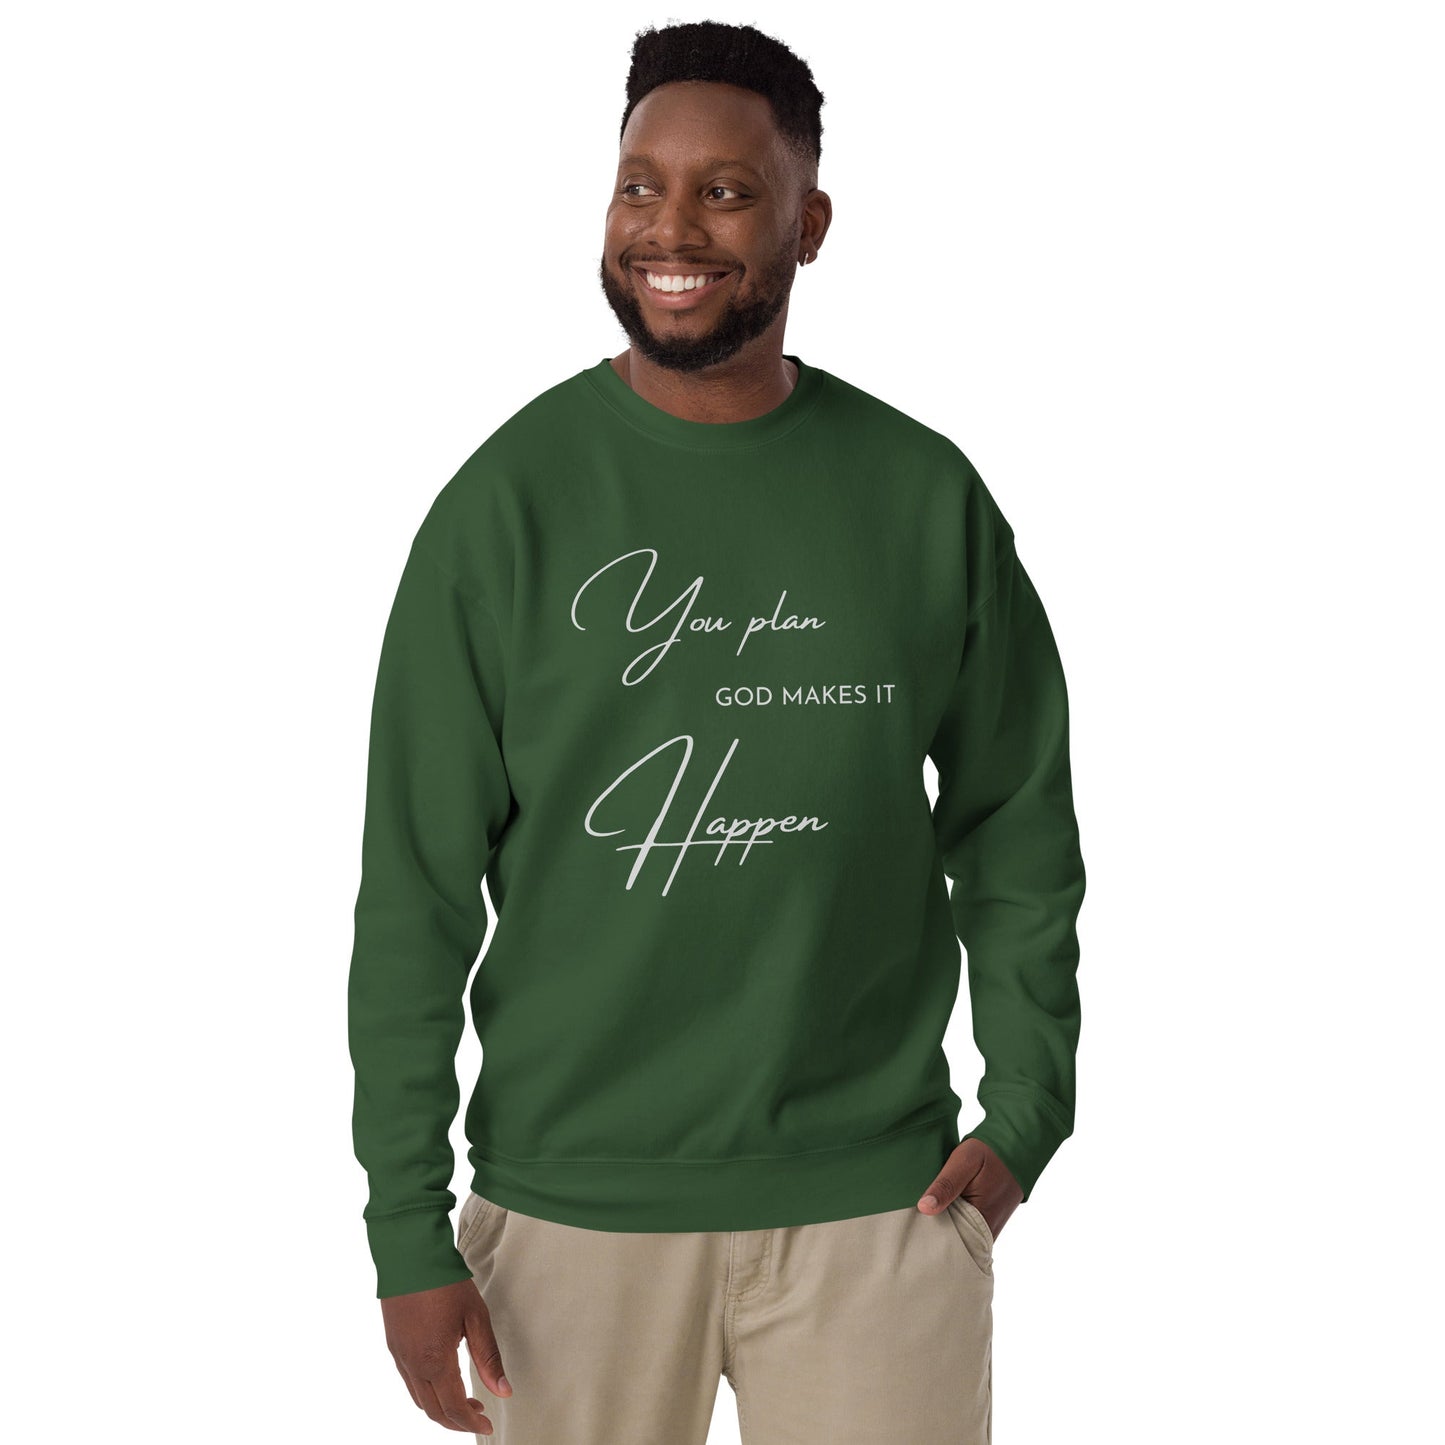 God Makes it Happen - Unisex Premium Sweatshirt